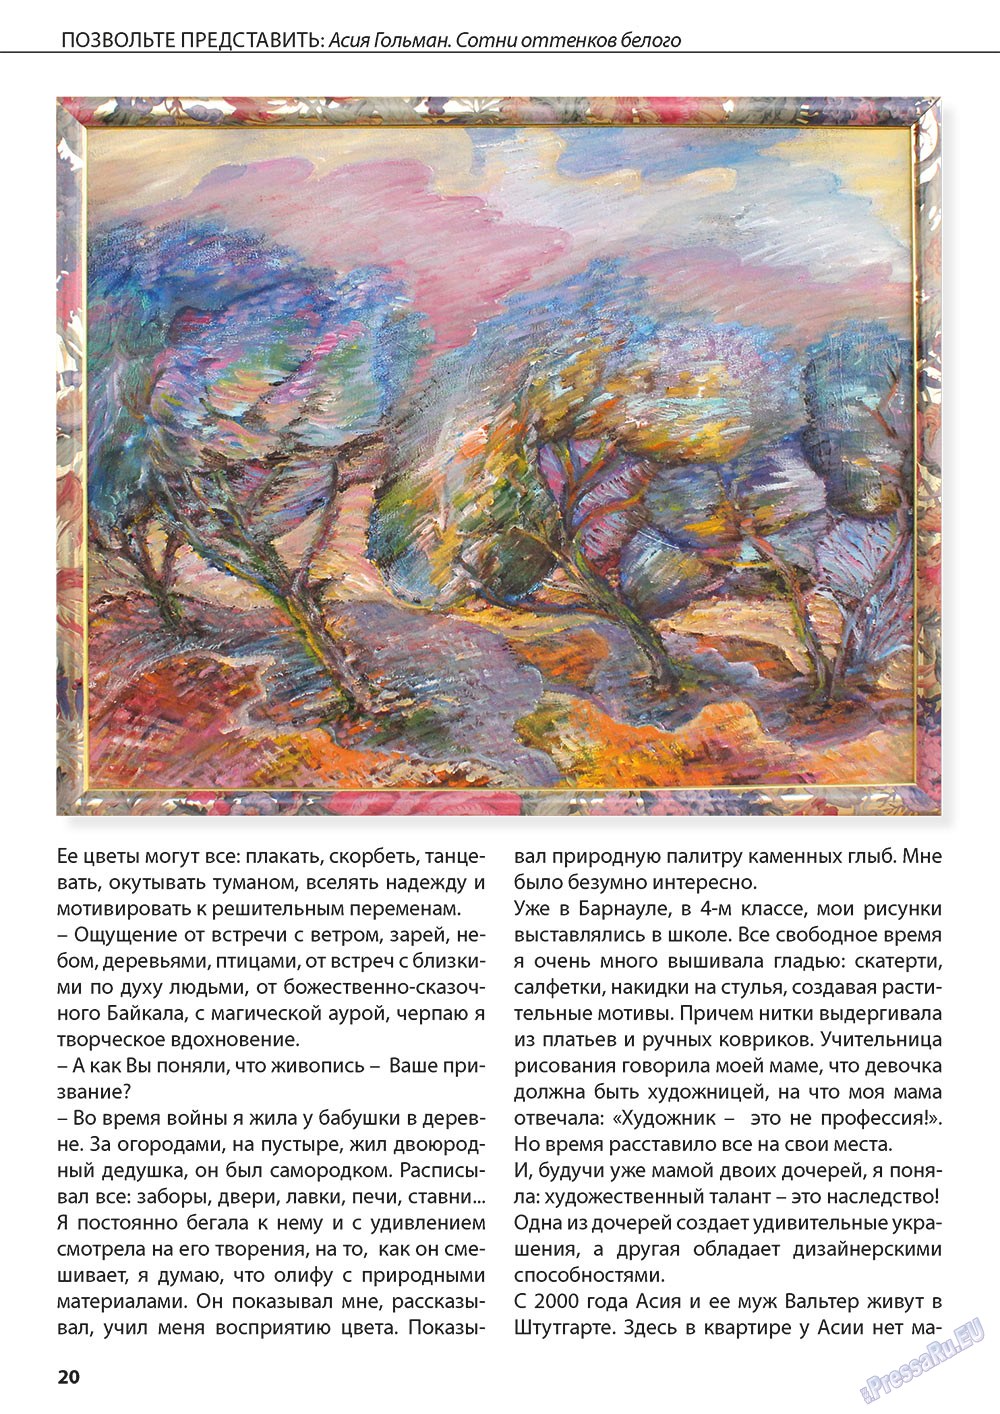 Wadim, журнал. 2012 №10 стр.20